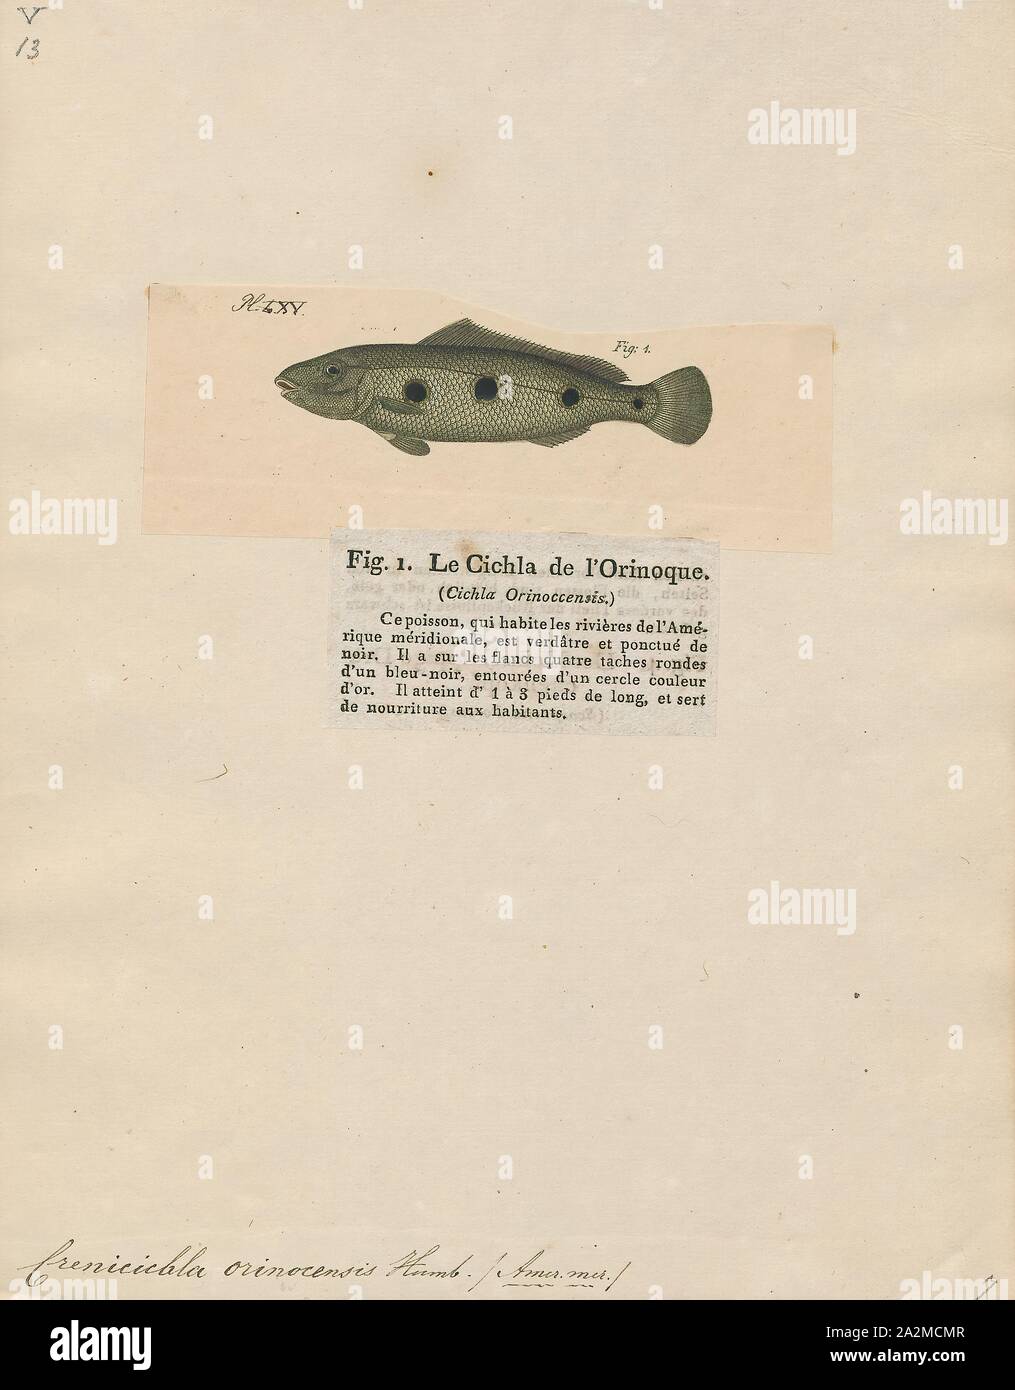 Crenicichla orinocensis, Print, 1700-1880 Stock Photo